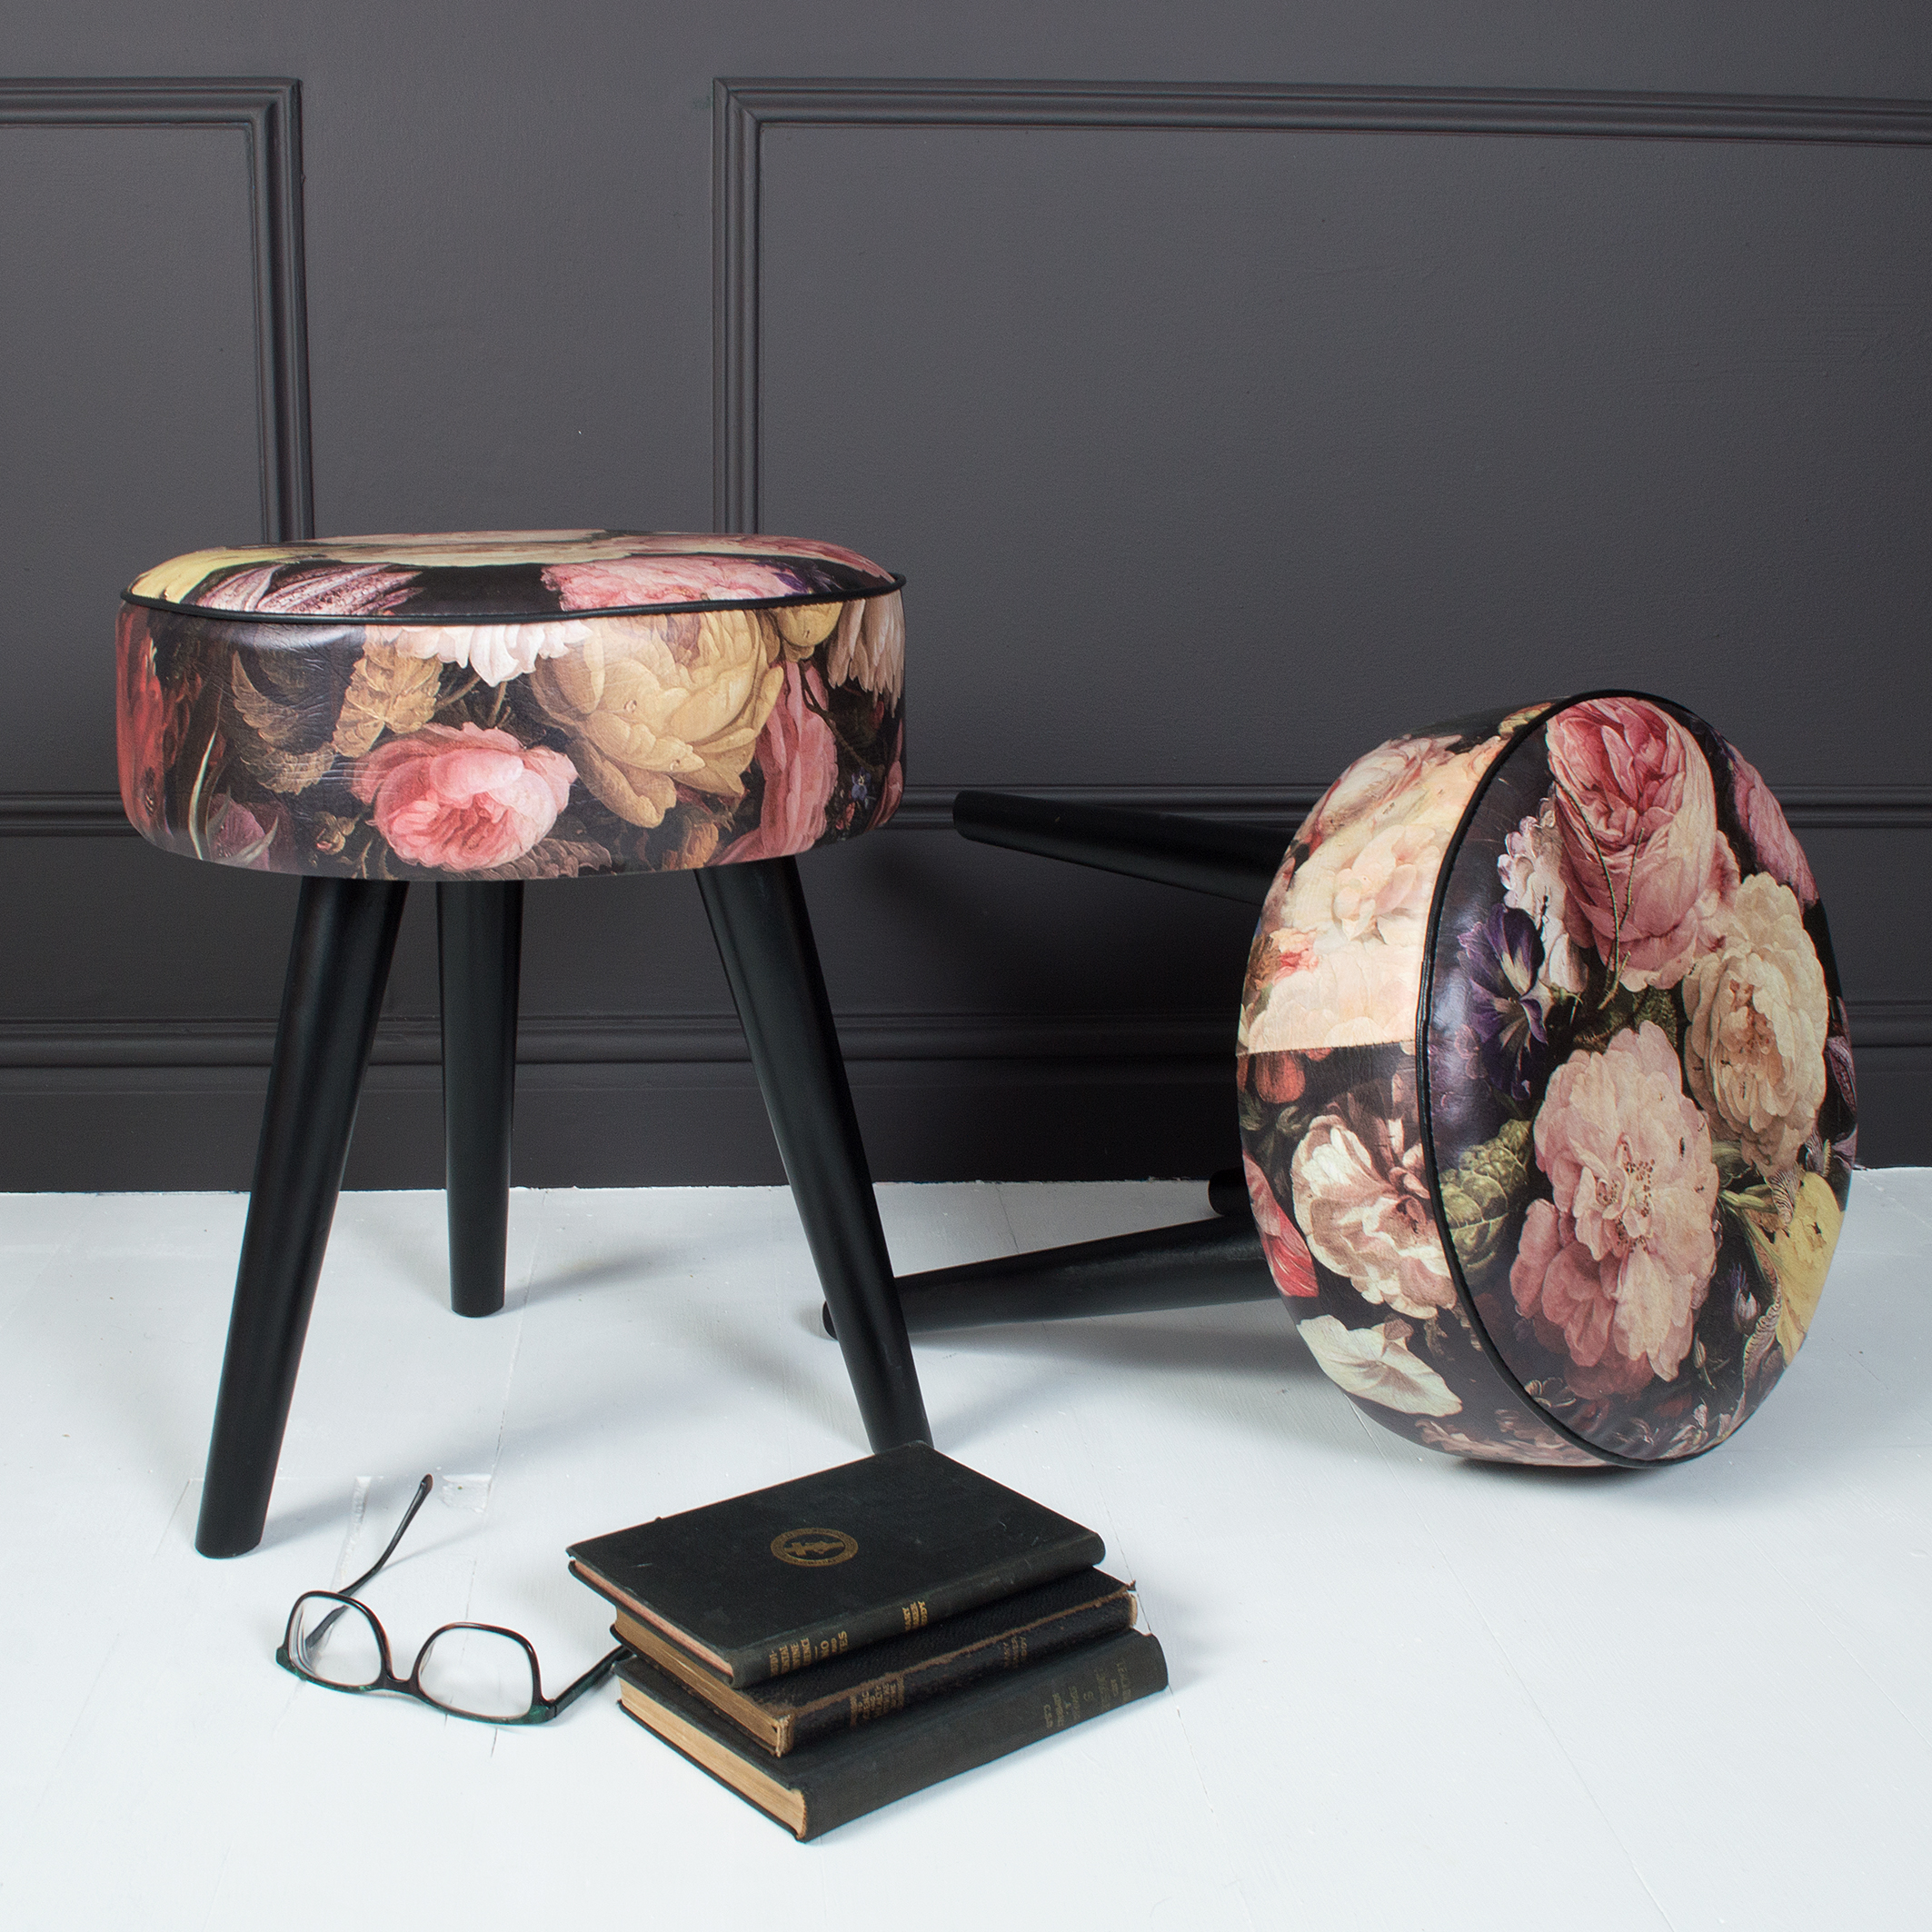   http://www.miafleur.com/floral-romance-stool  